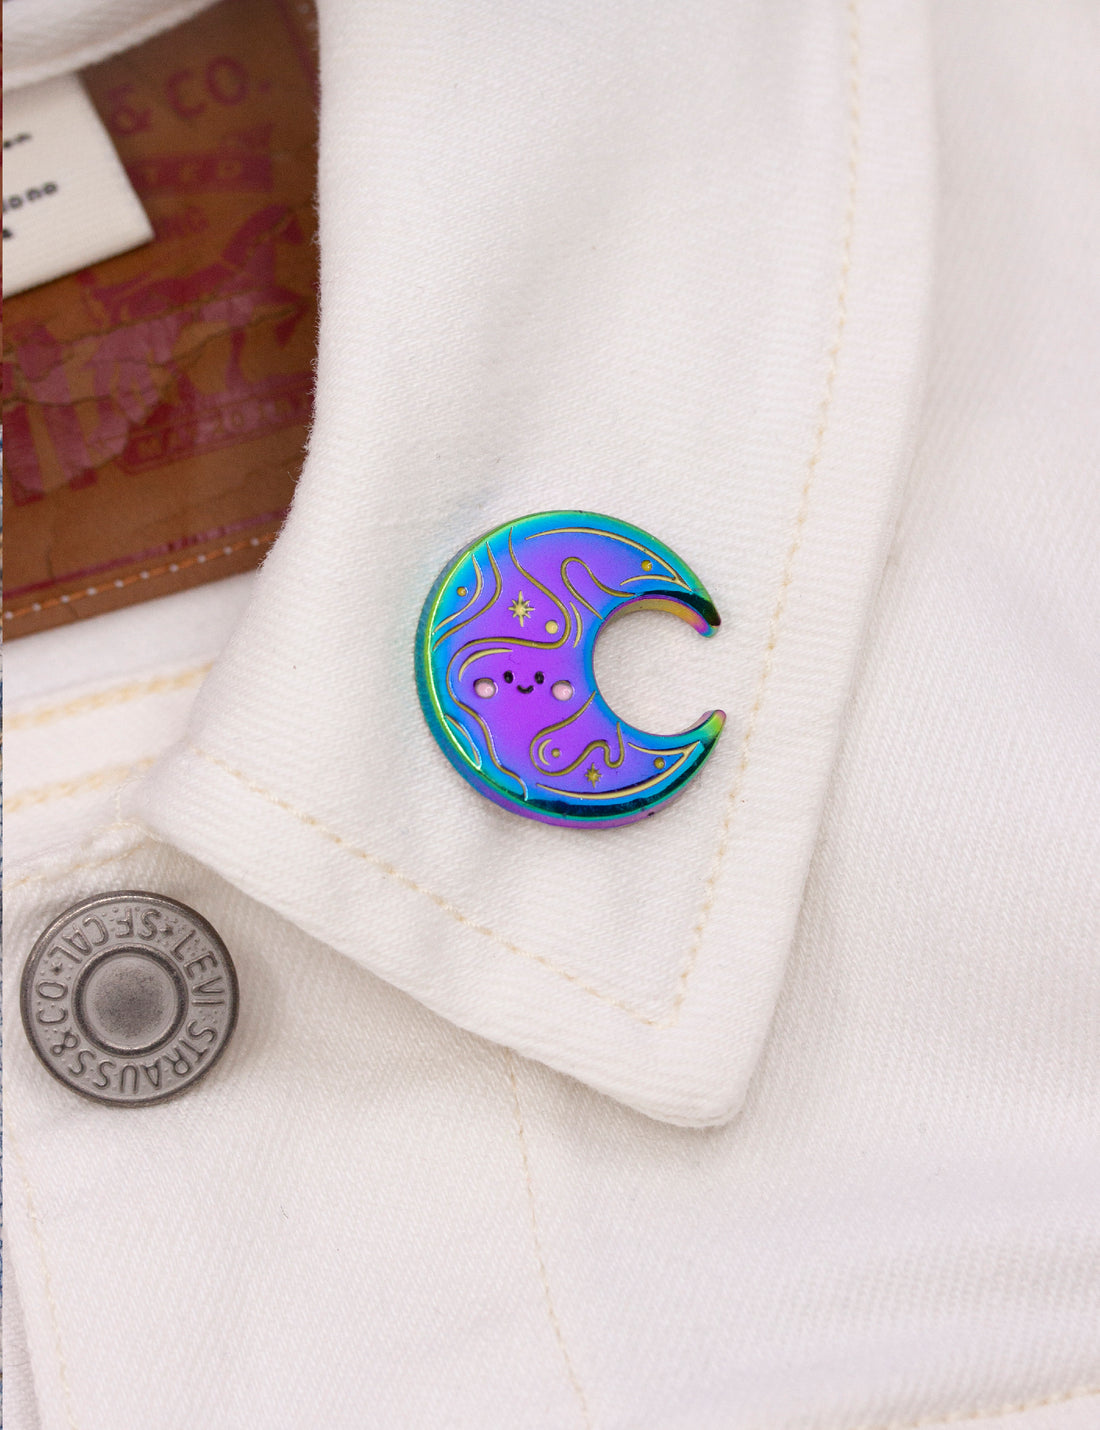 Celestial Moon pin